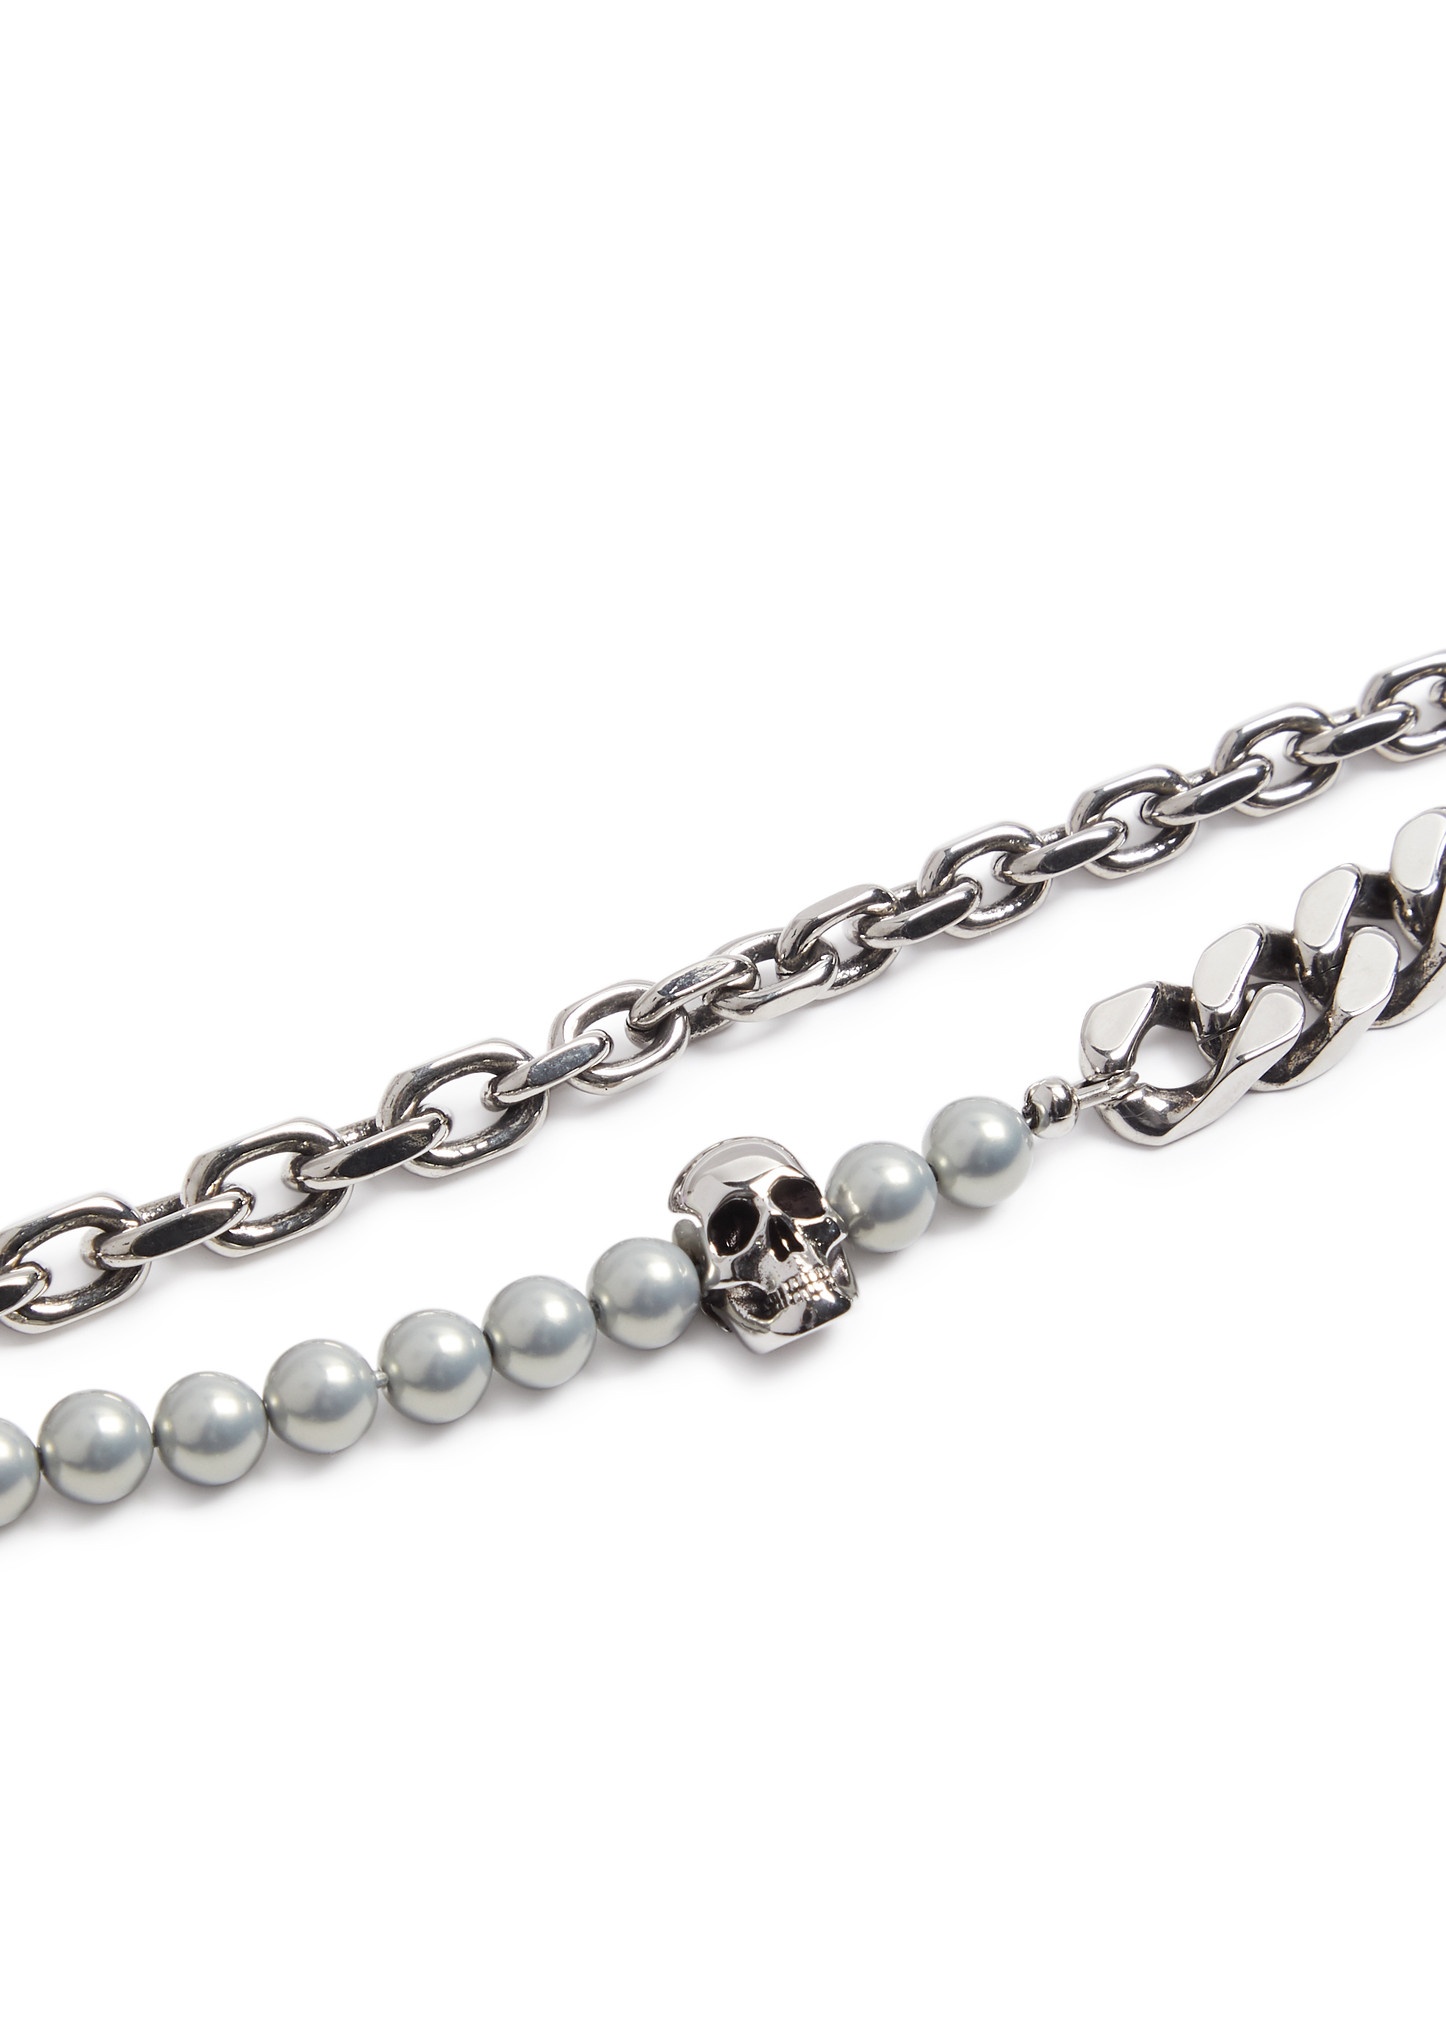 Skull embellished double chain bracelet - 3